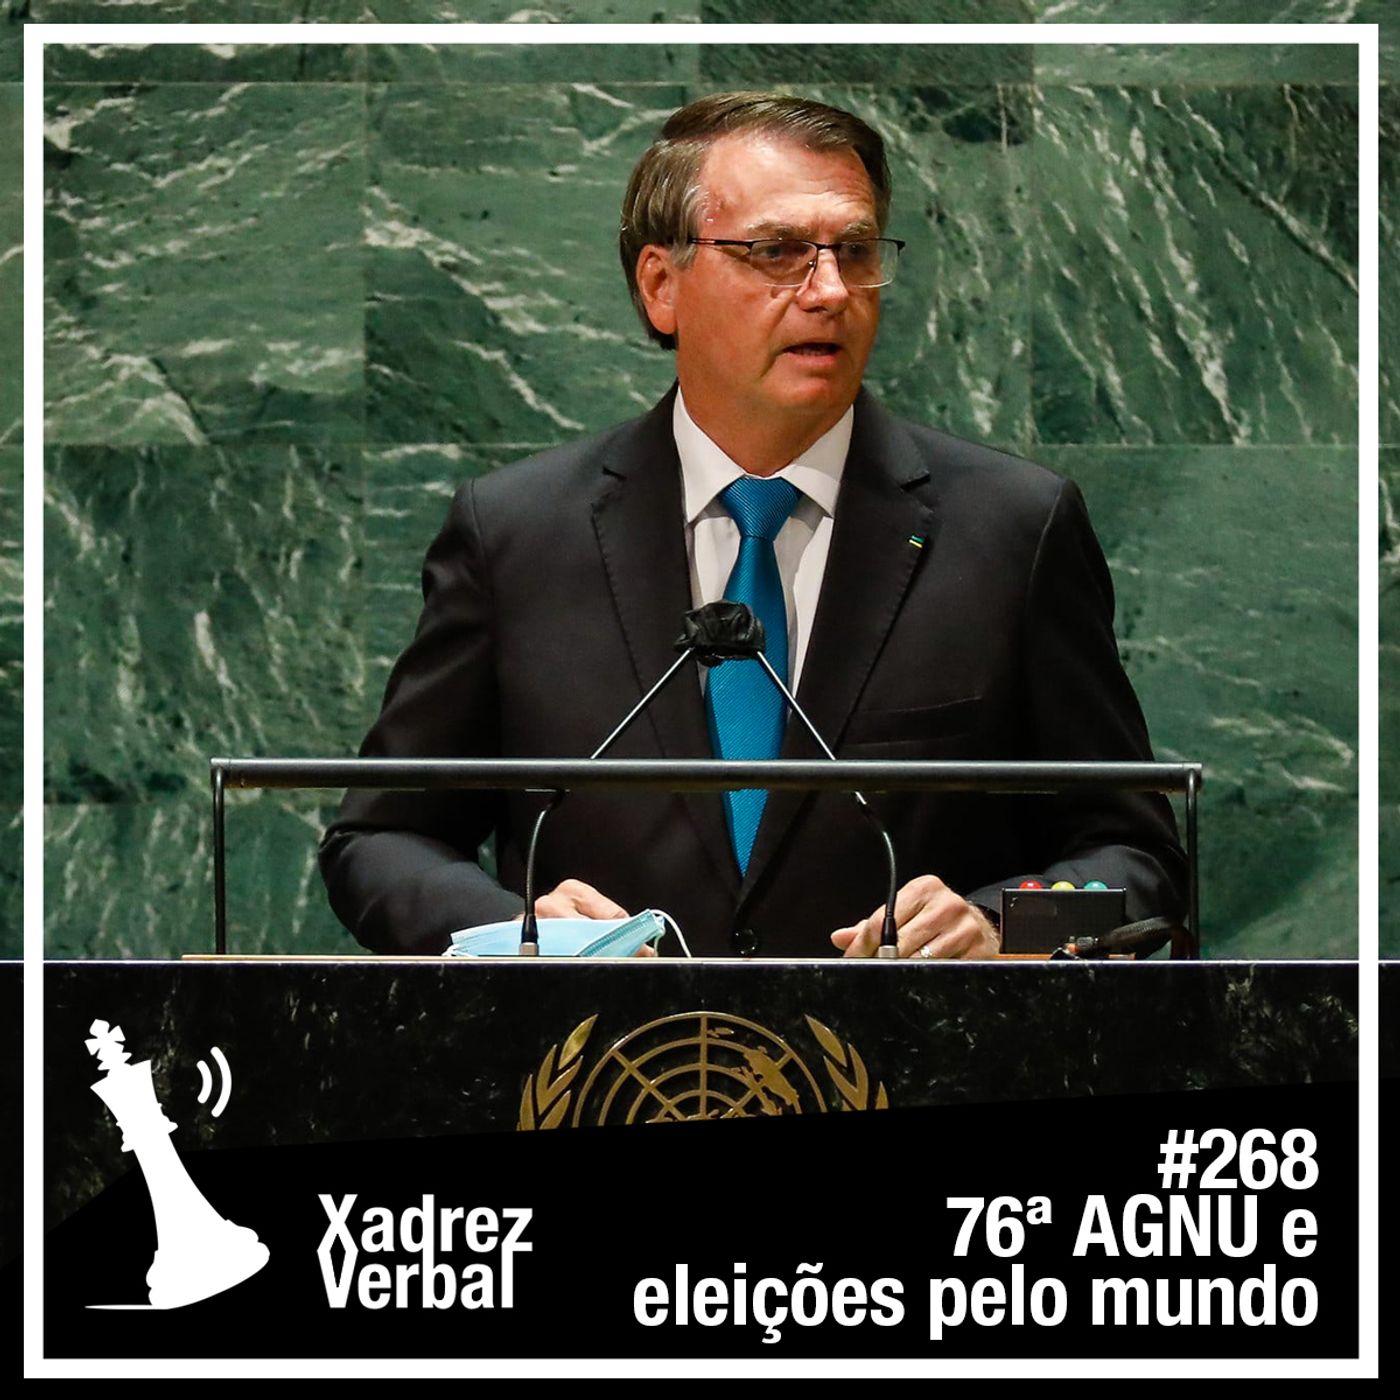 Xadrez Verbal #268 - 76ª Assembleia Geral da ONU